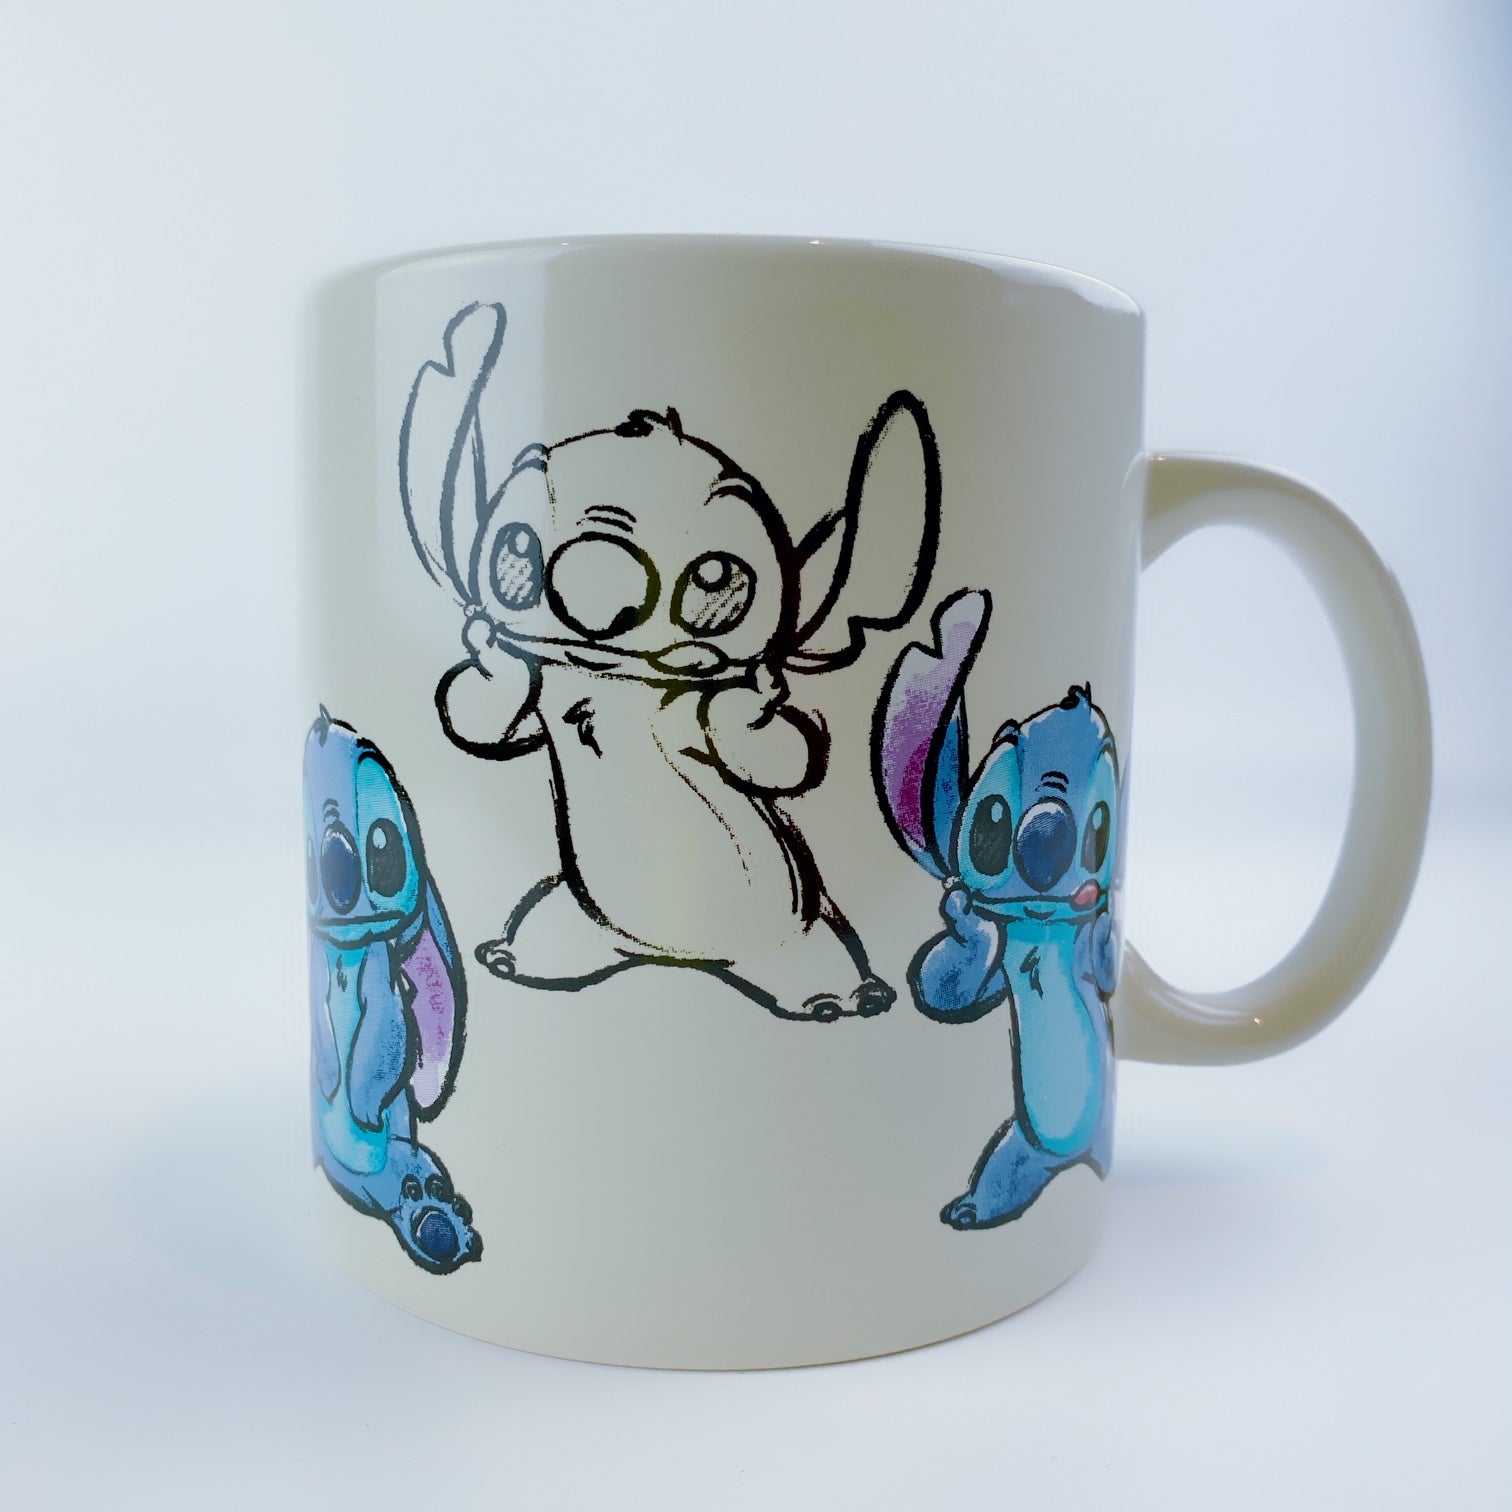 Disney Stitch Ceramic Top Travel Mug